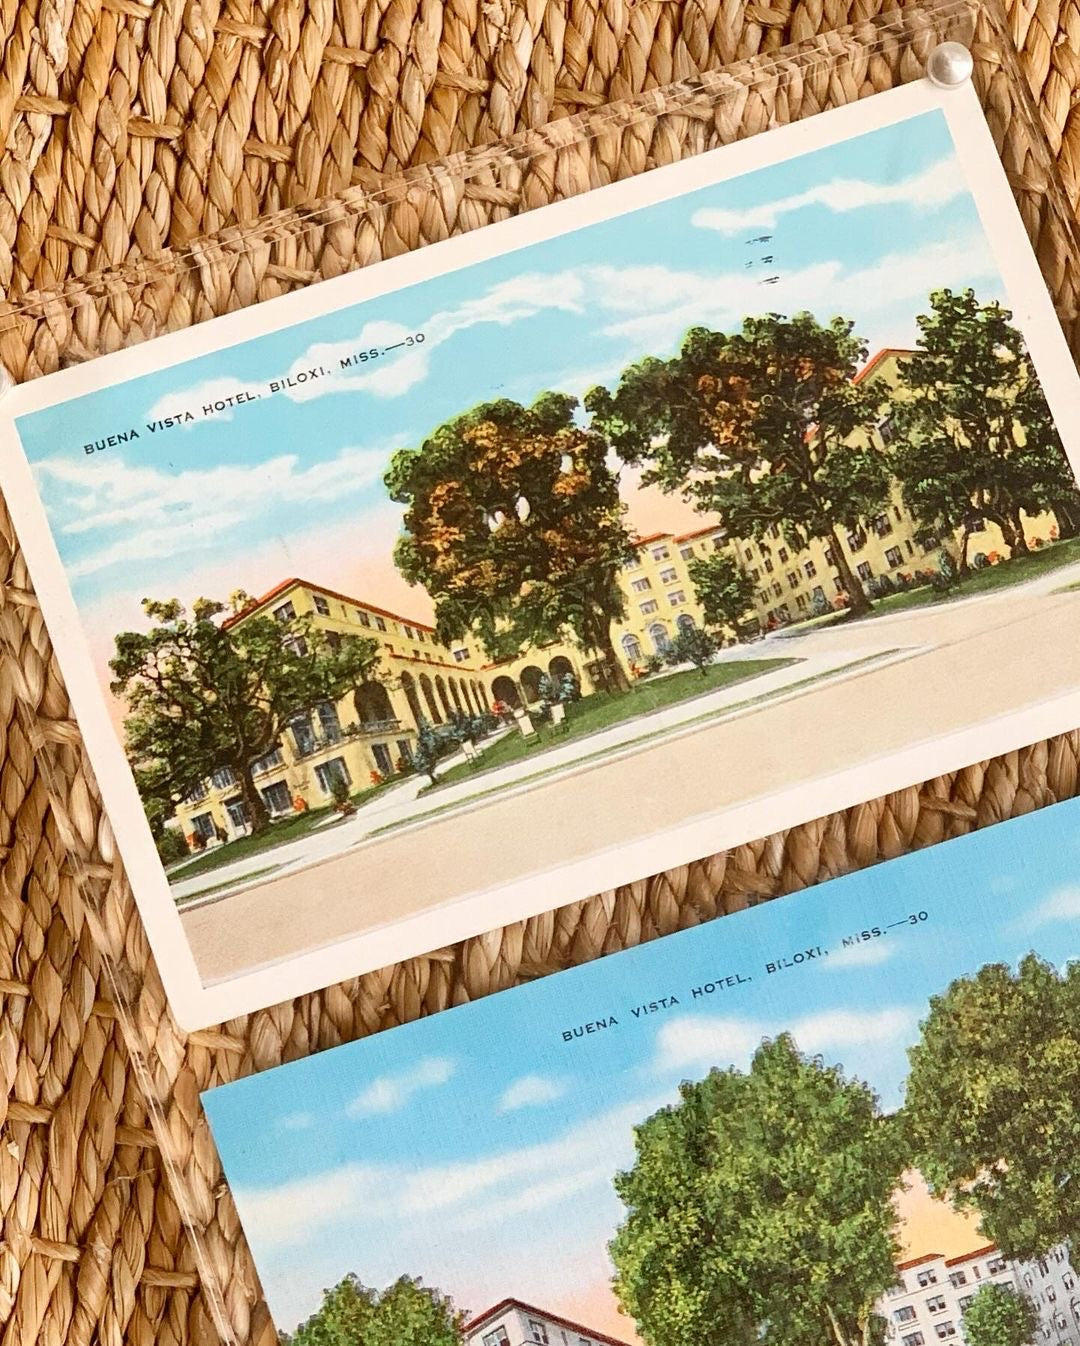 Buena Vista Hotel, Biloxi ~ Mississippi Gulf Coast Postcard Set (1930)